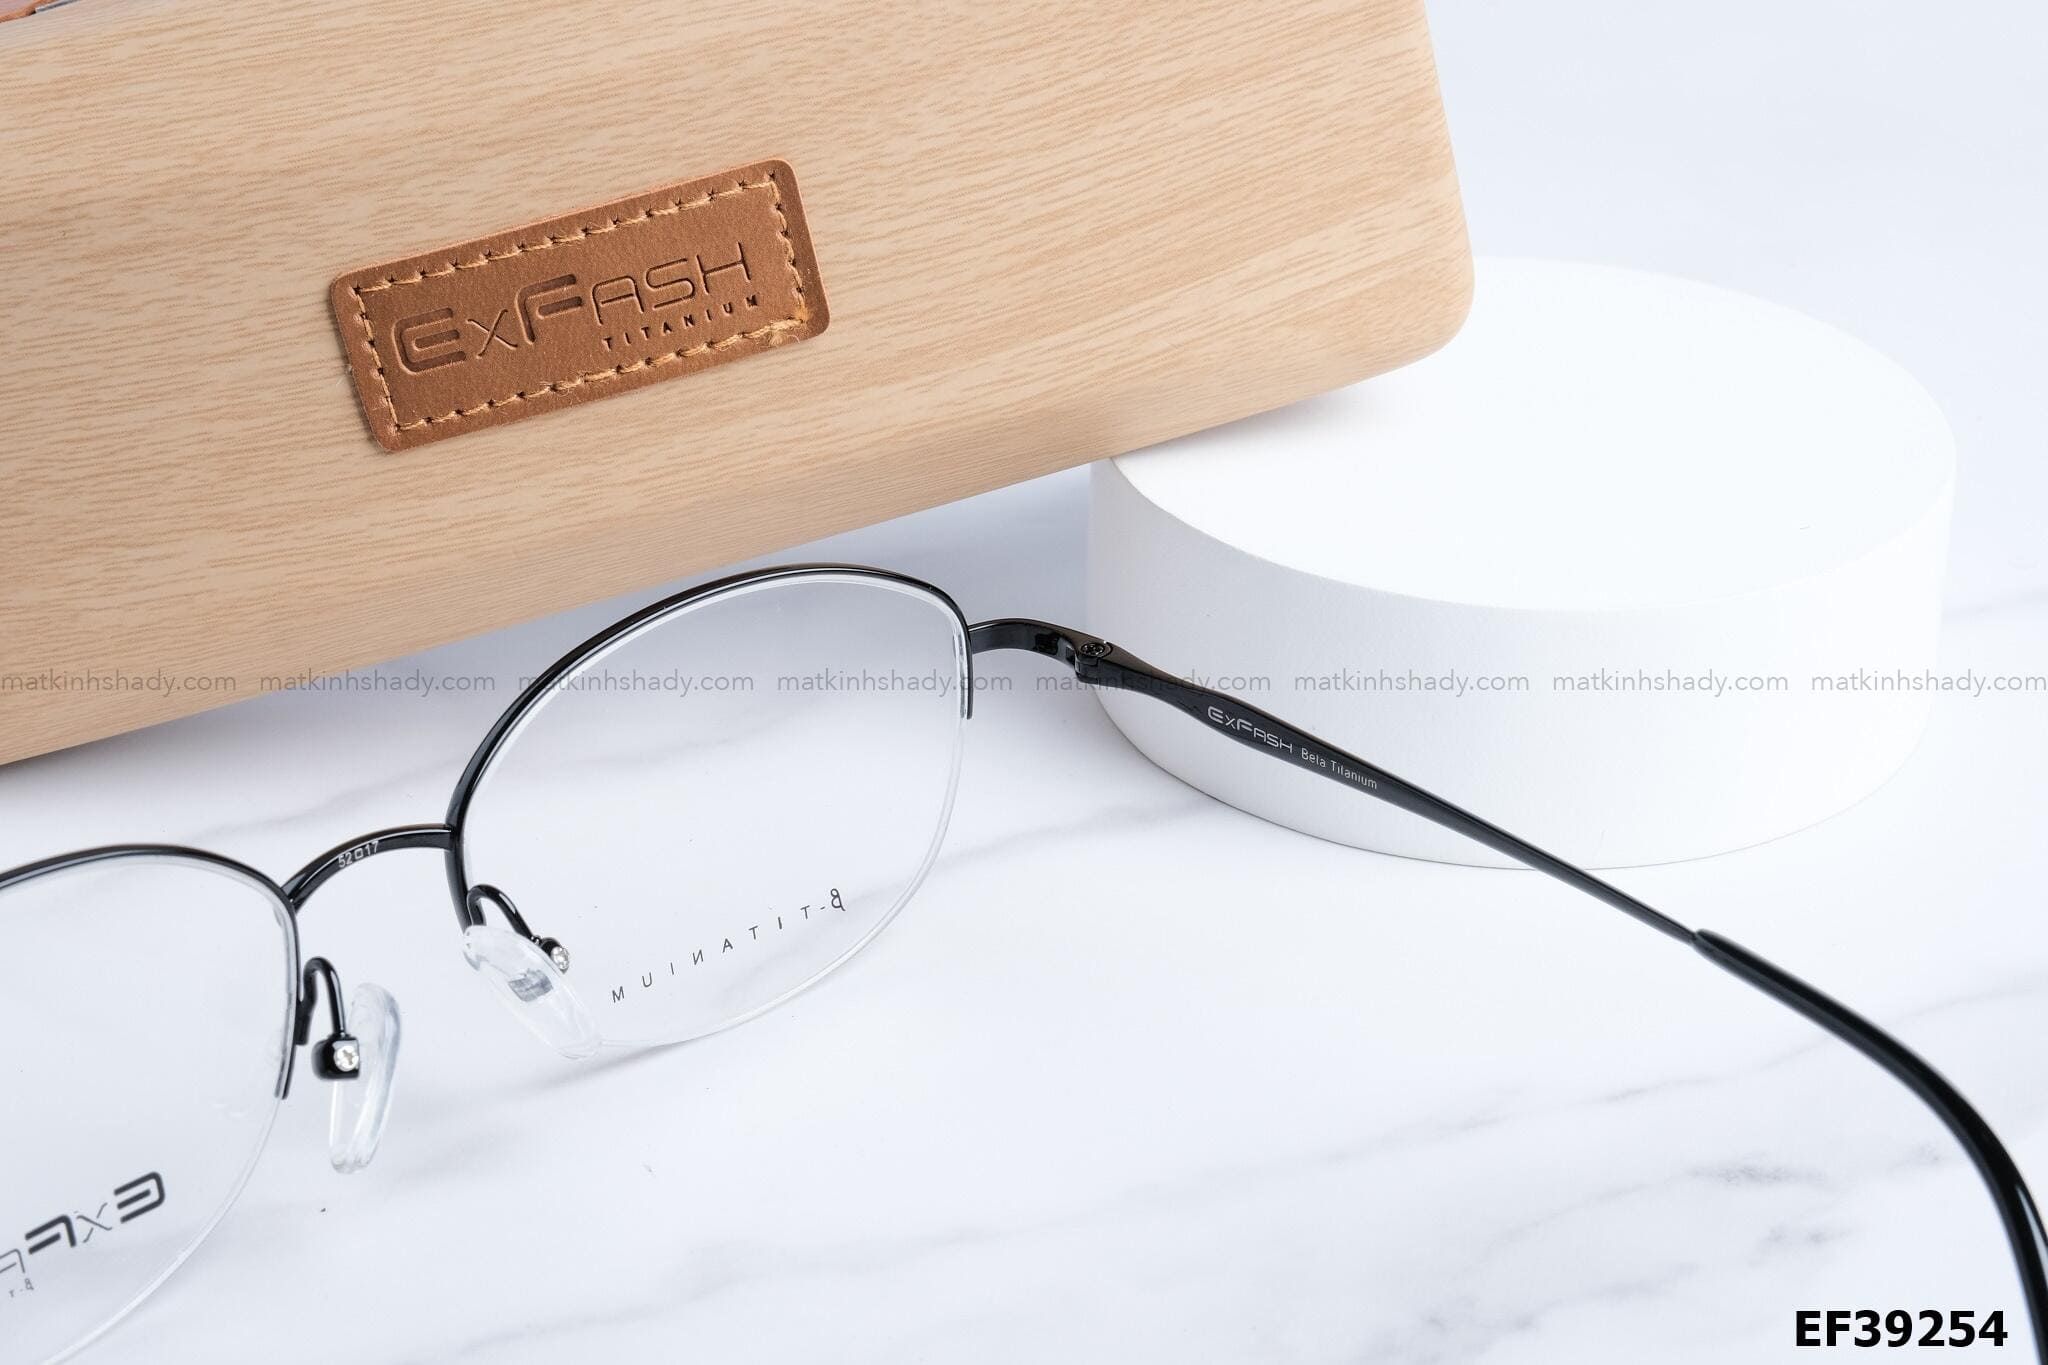  Exfash Eyewear - Glasses - EF39254 